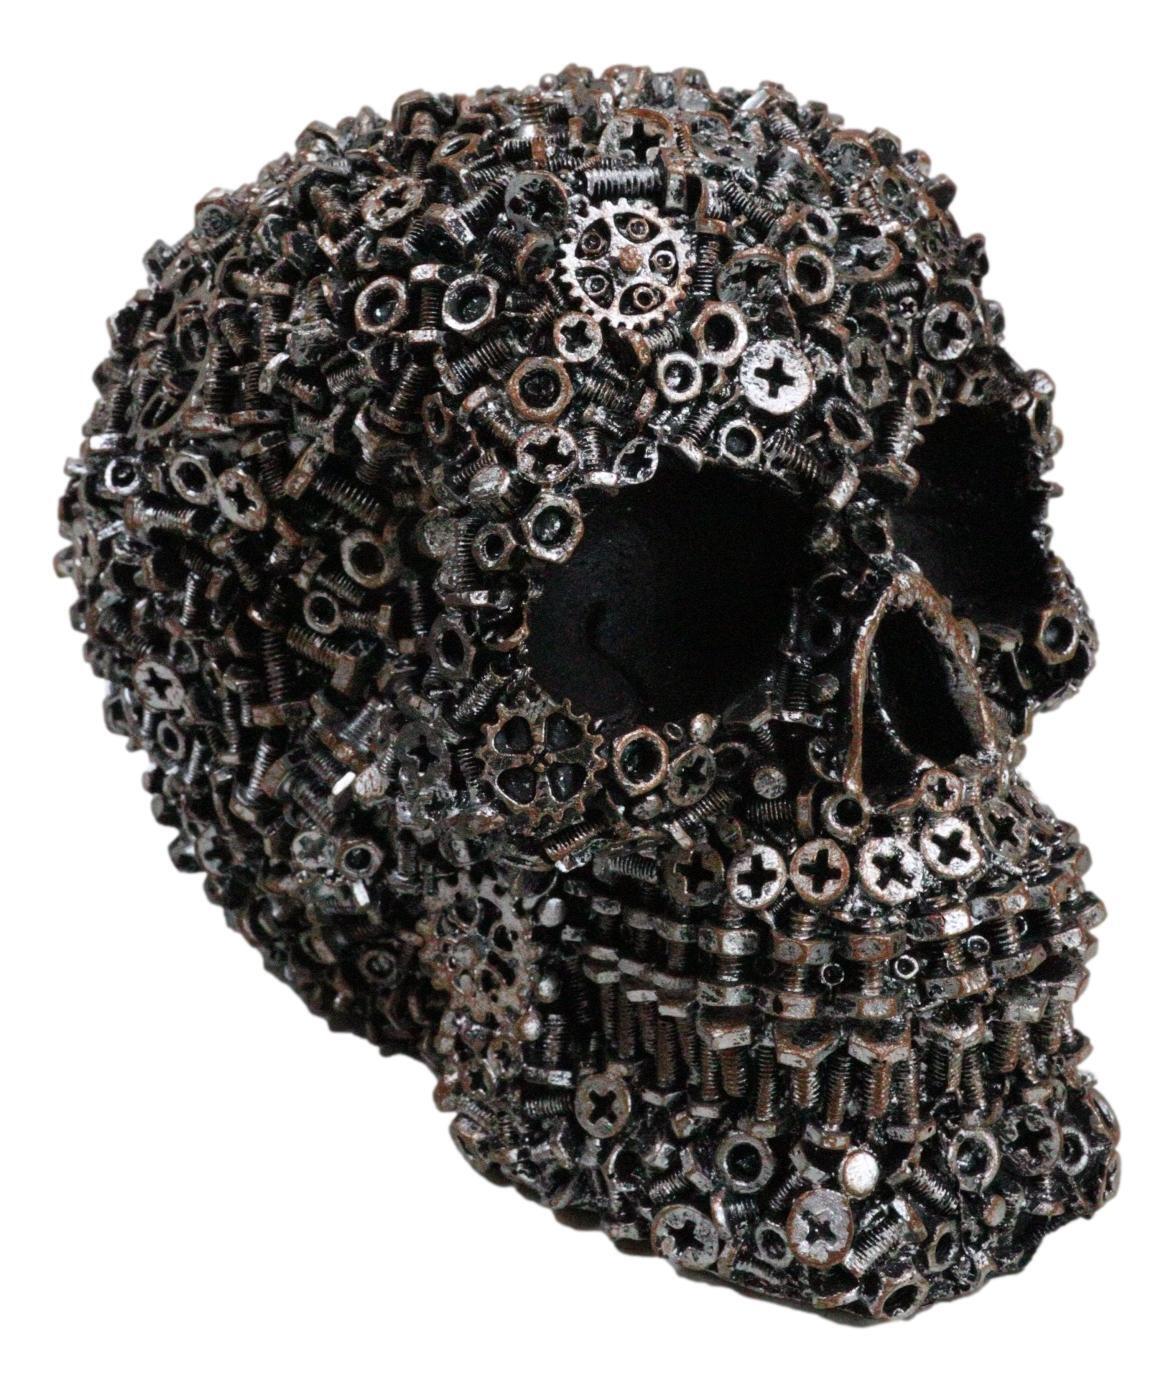 Junkyard Mechanic Gears Nuts Bolts And Screws Hardware Skull Decorative Figurine